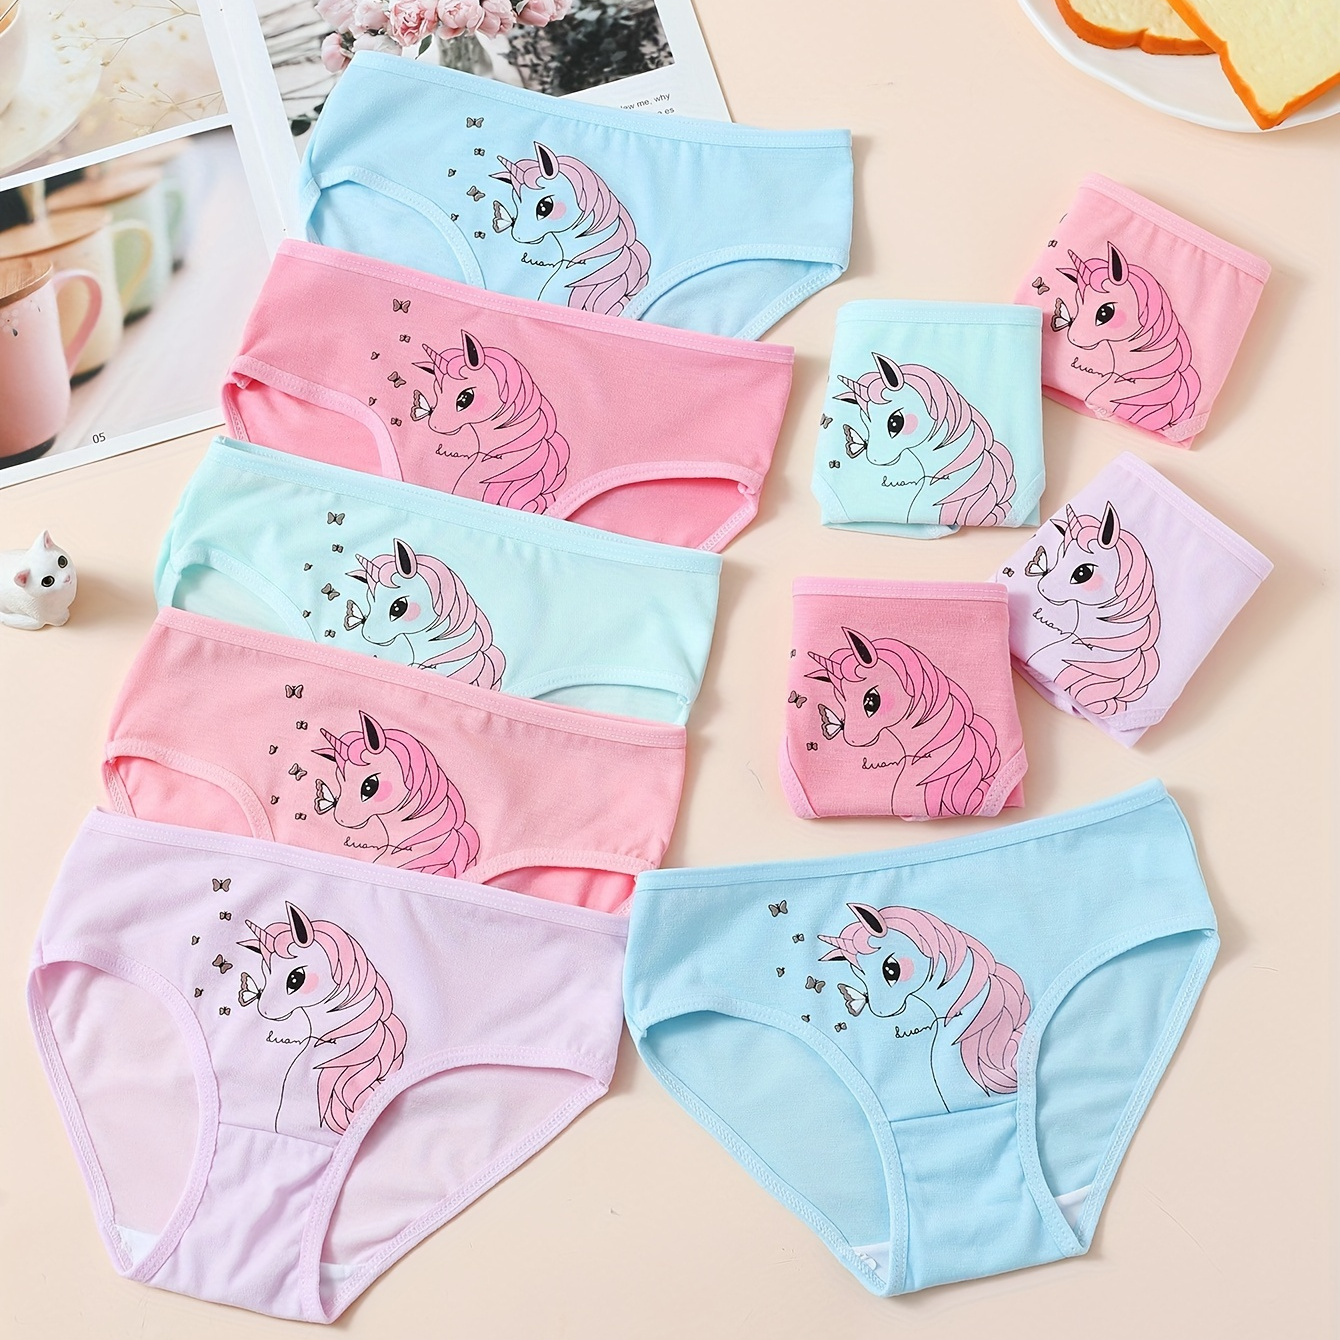  Toddler Girls Underwear Unicorn Mermaid Panties Soft Cotton  Briefs 2-3t Multicolored